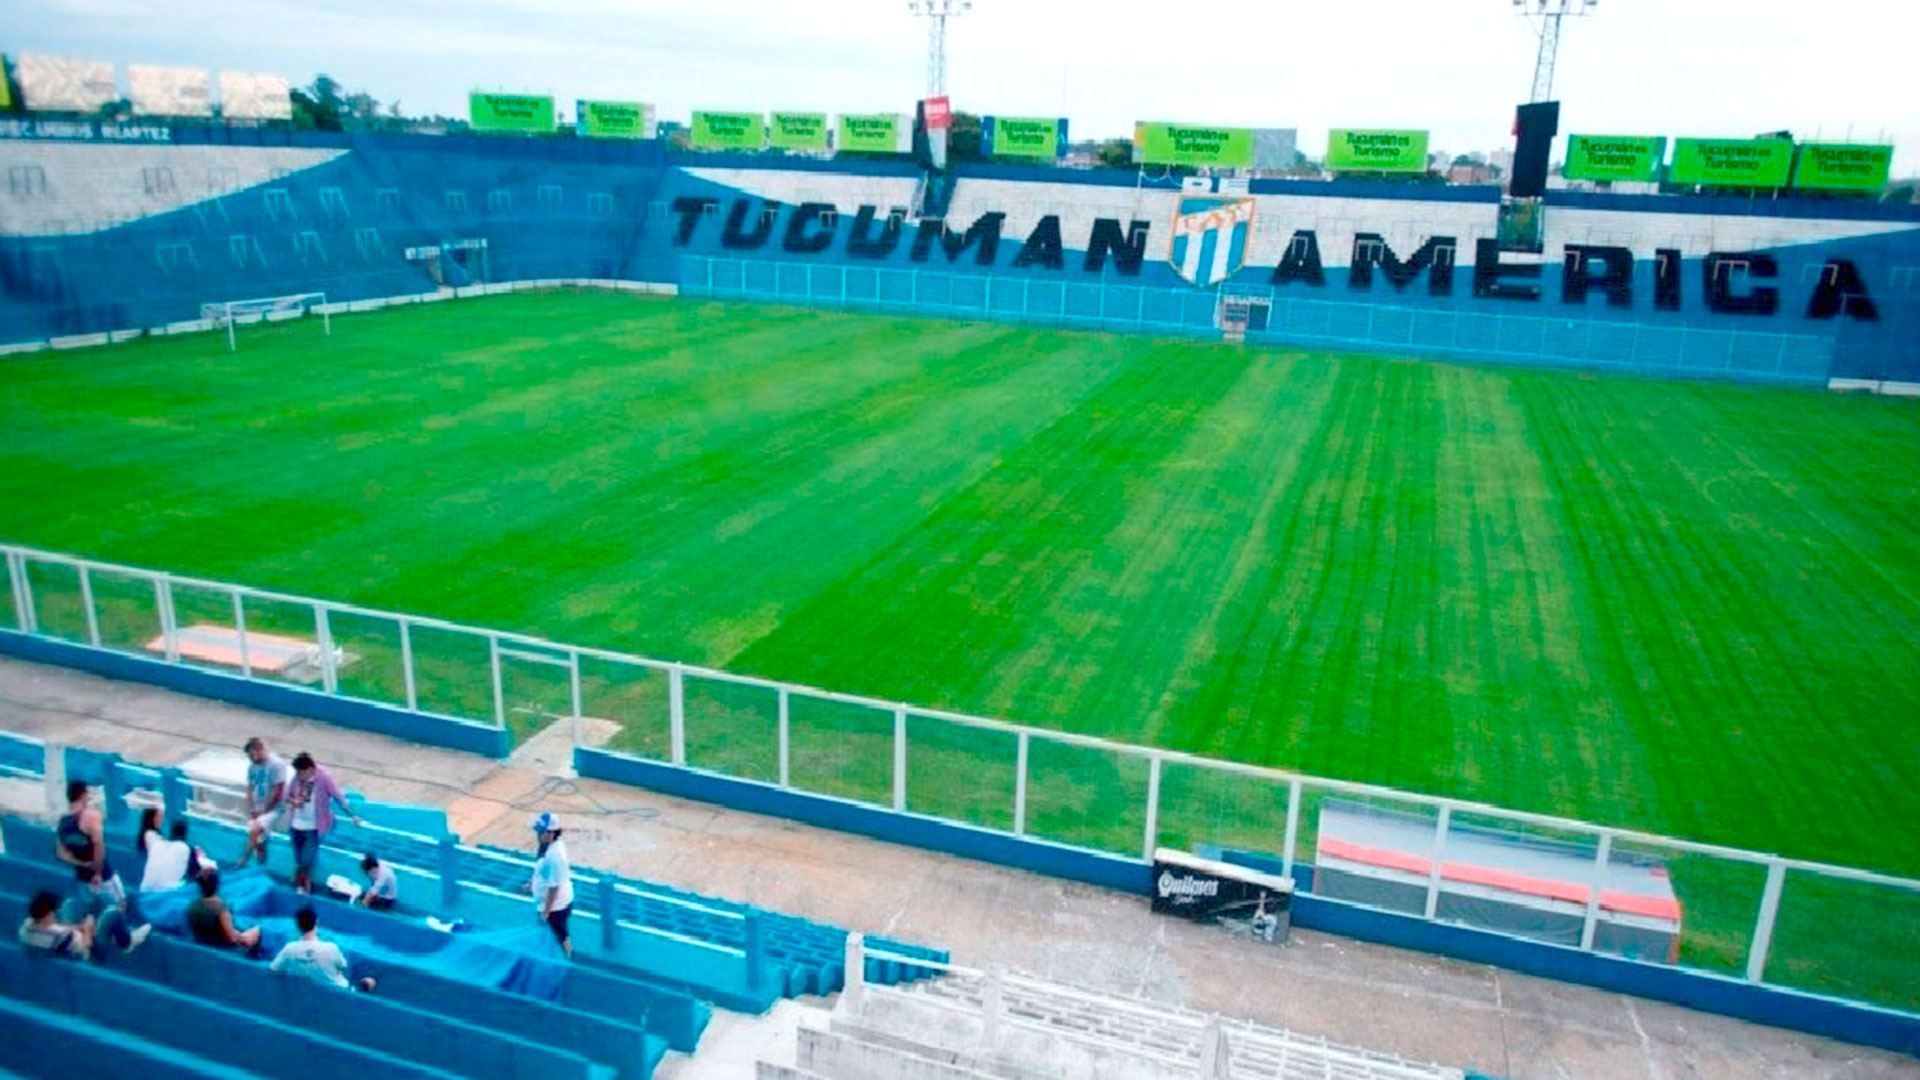 On the field of Atlético Tucumán, it reads Tucumán América 1